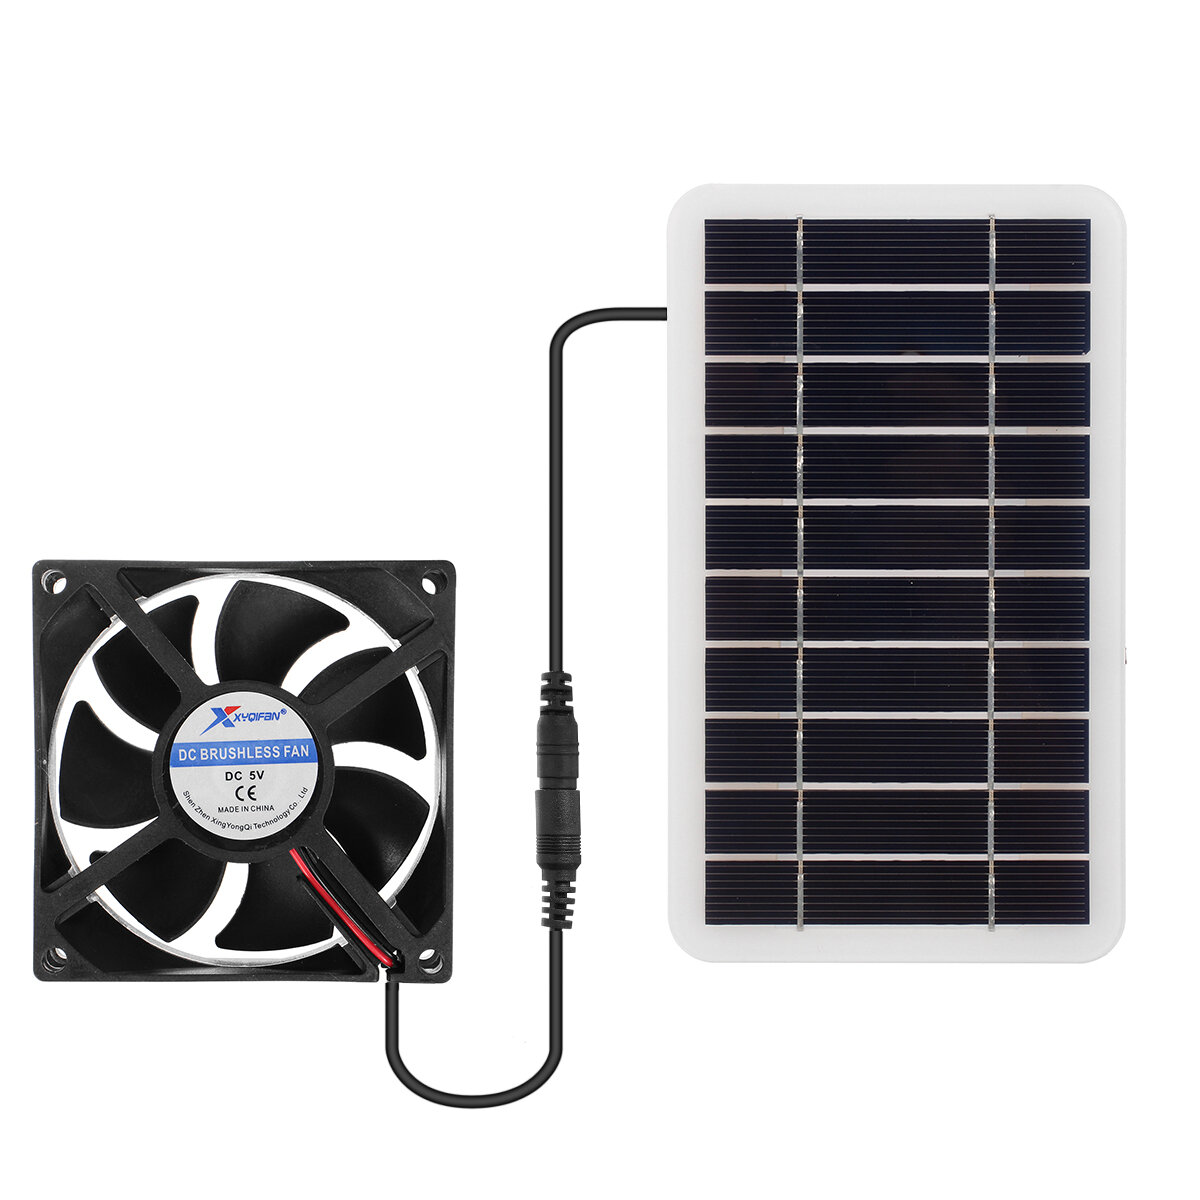 Kit de painel solar portátil de 100 W Dual DC 5V Kit de carregador USB Controlador de energia solar com ventiladores